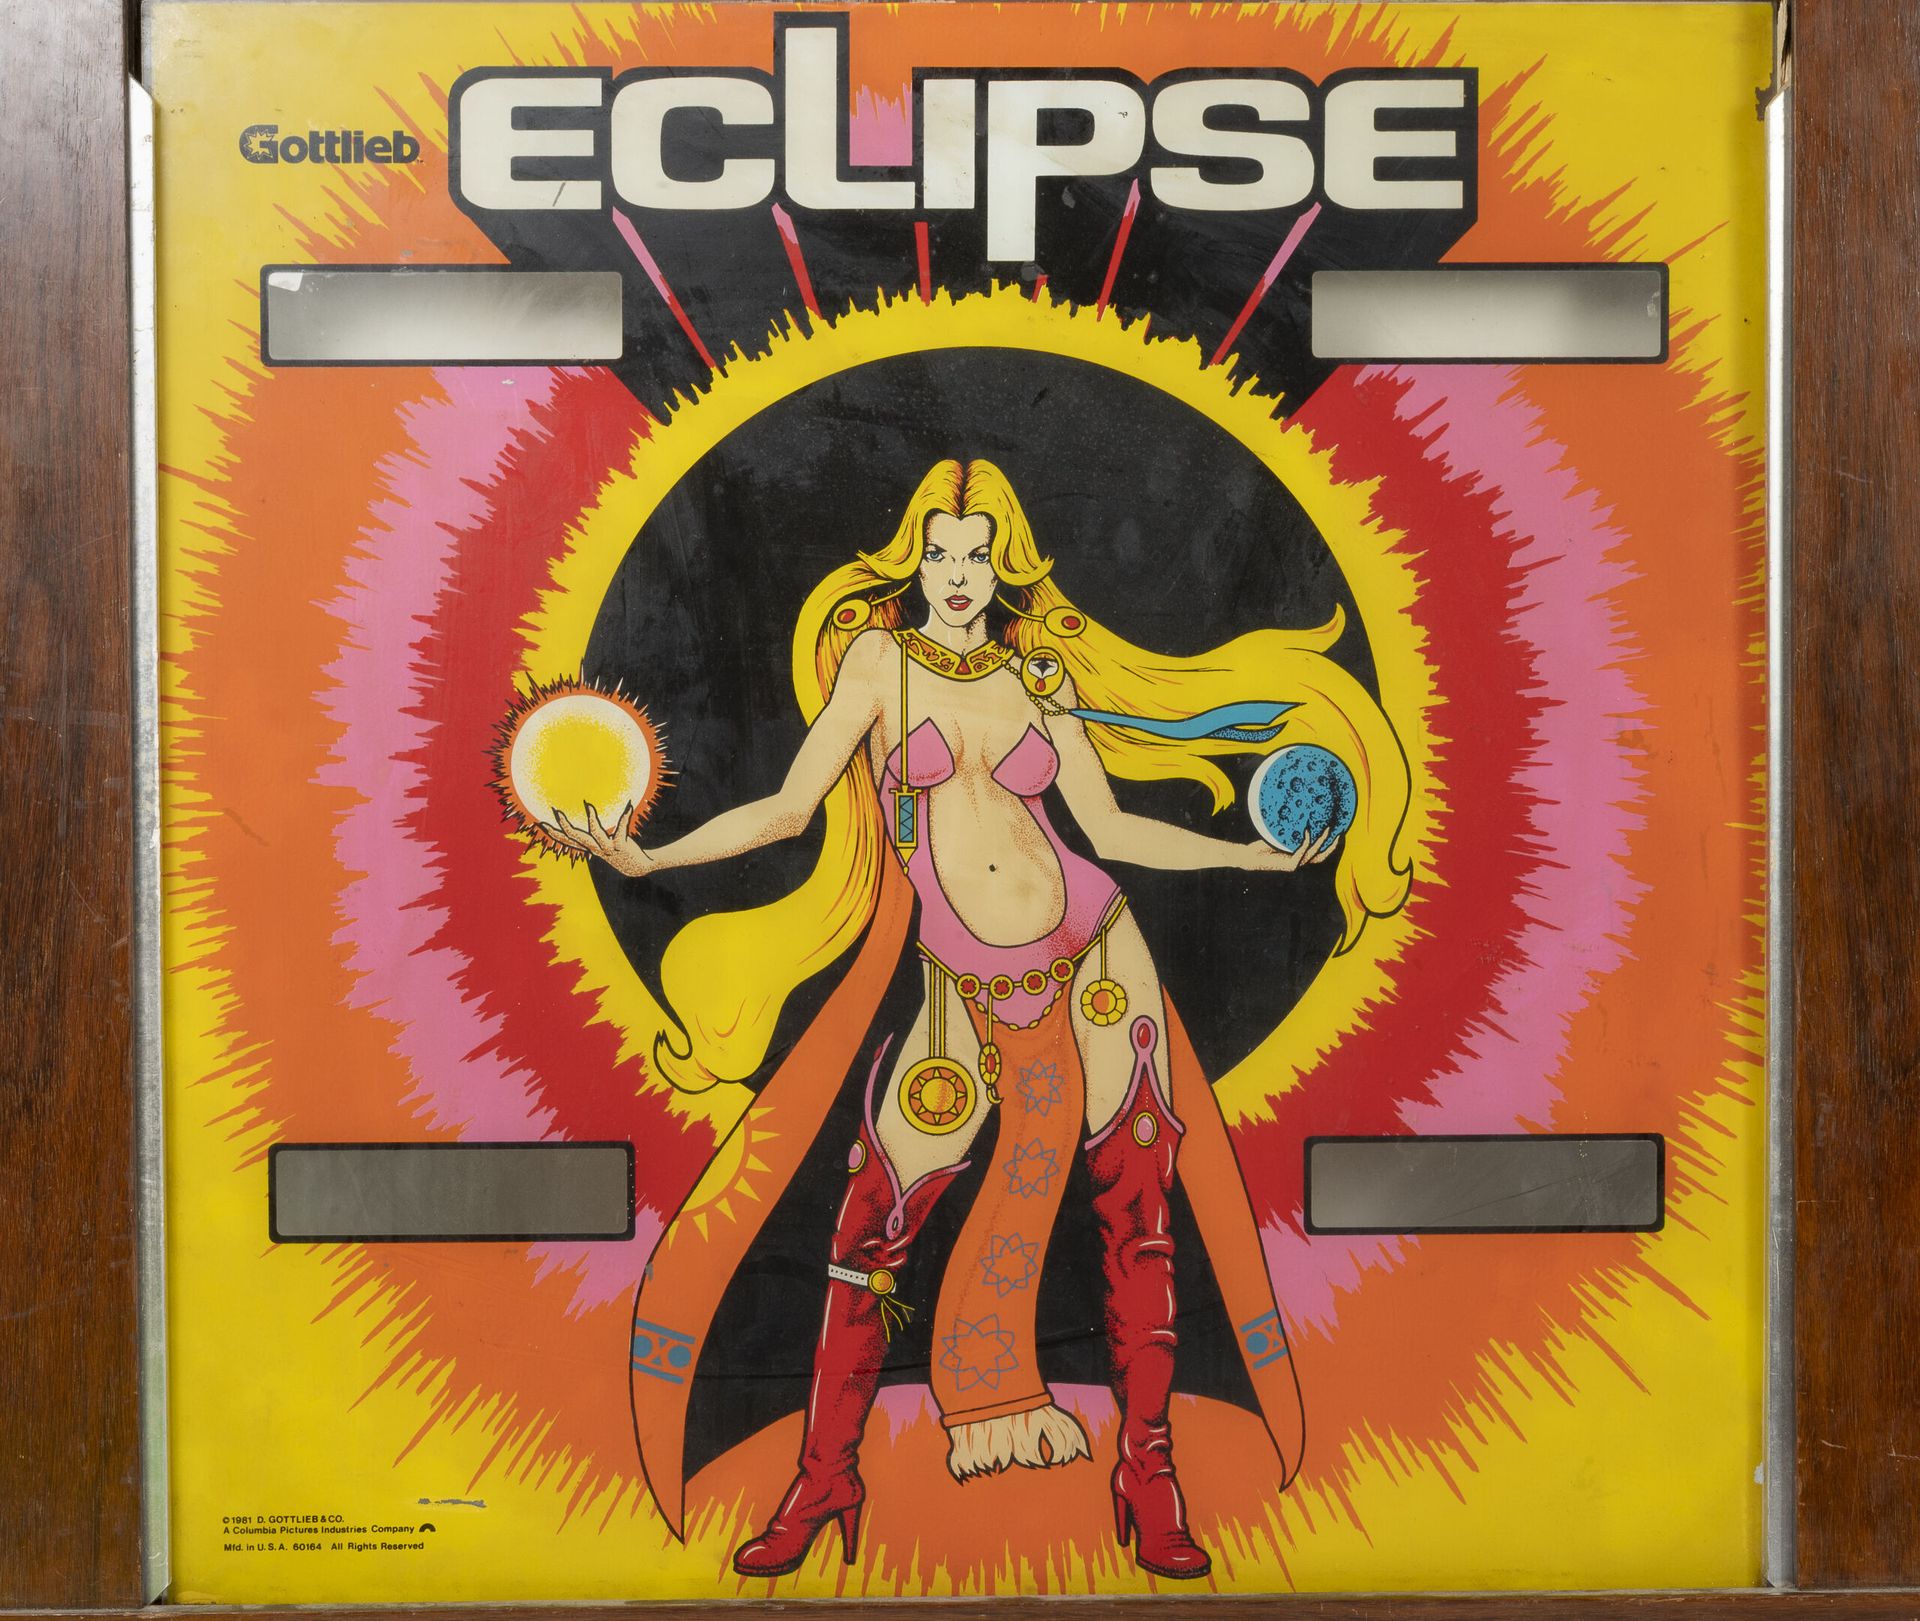 David GOTTLIEB & Co. Eclipse, 1981.

Ventana de pinball en un marco de madera.

&hellip;